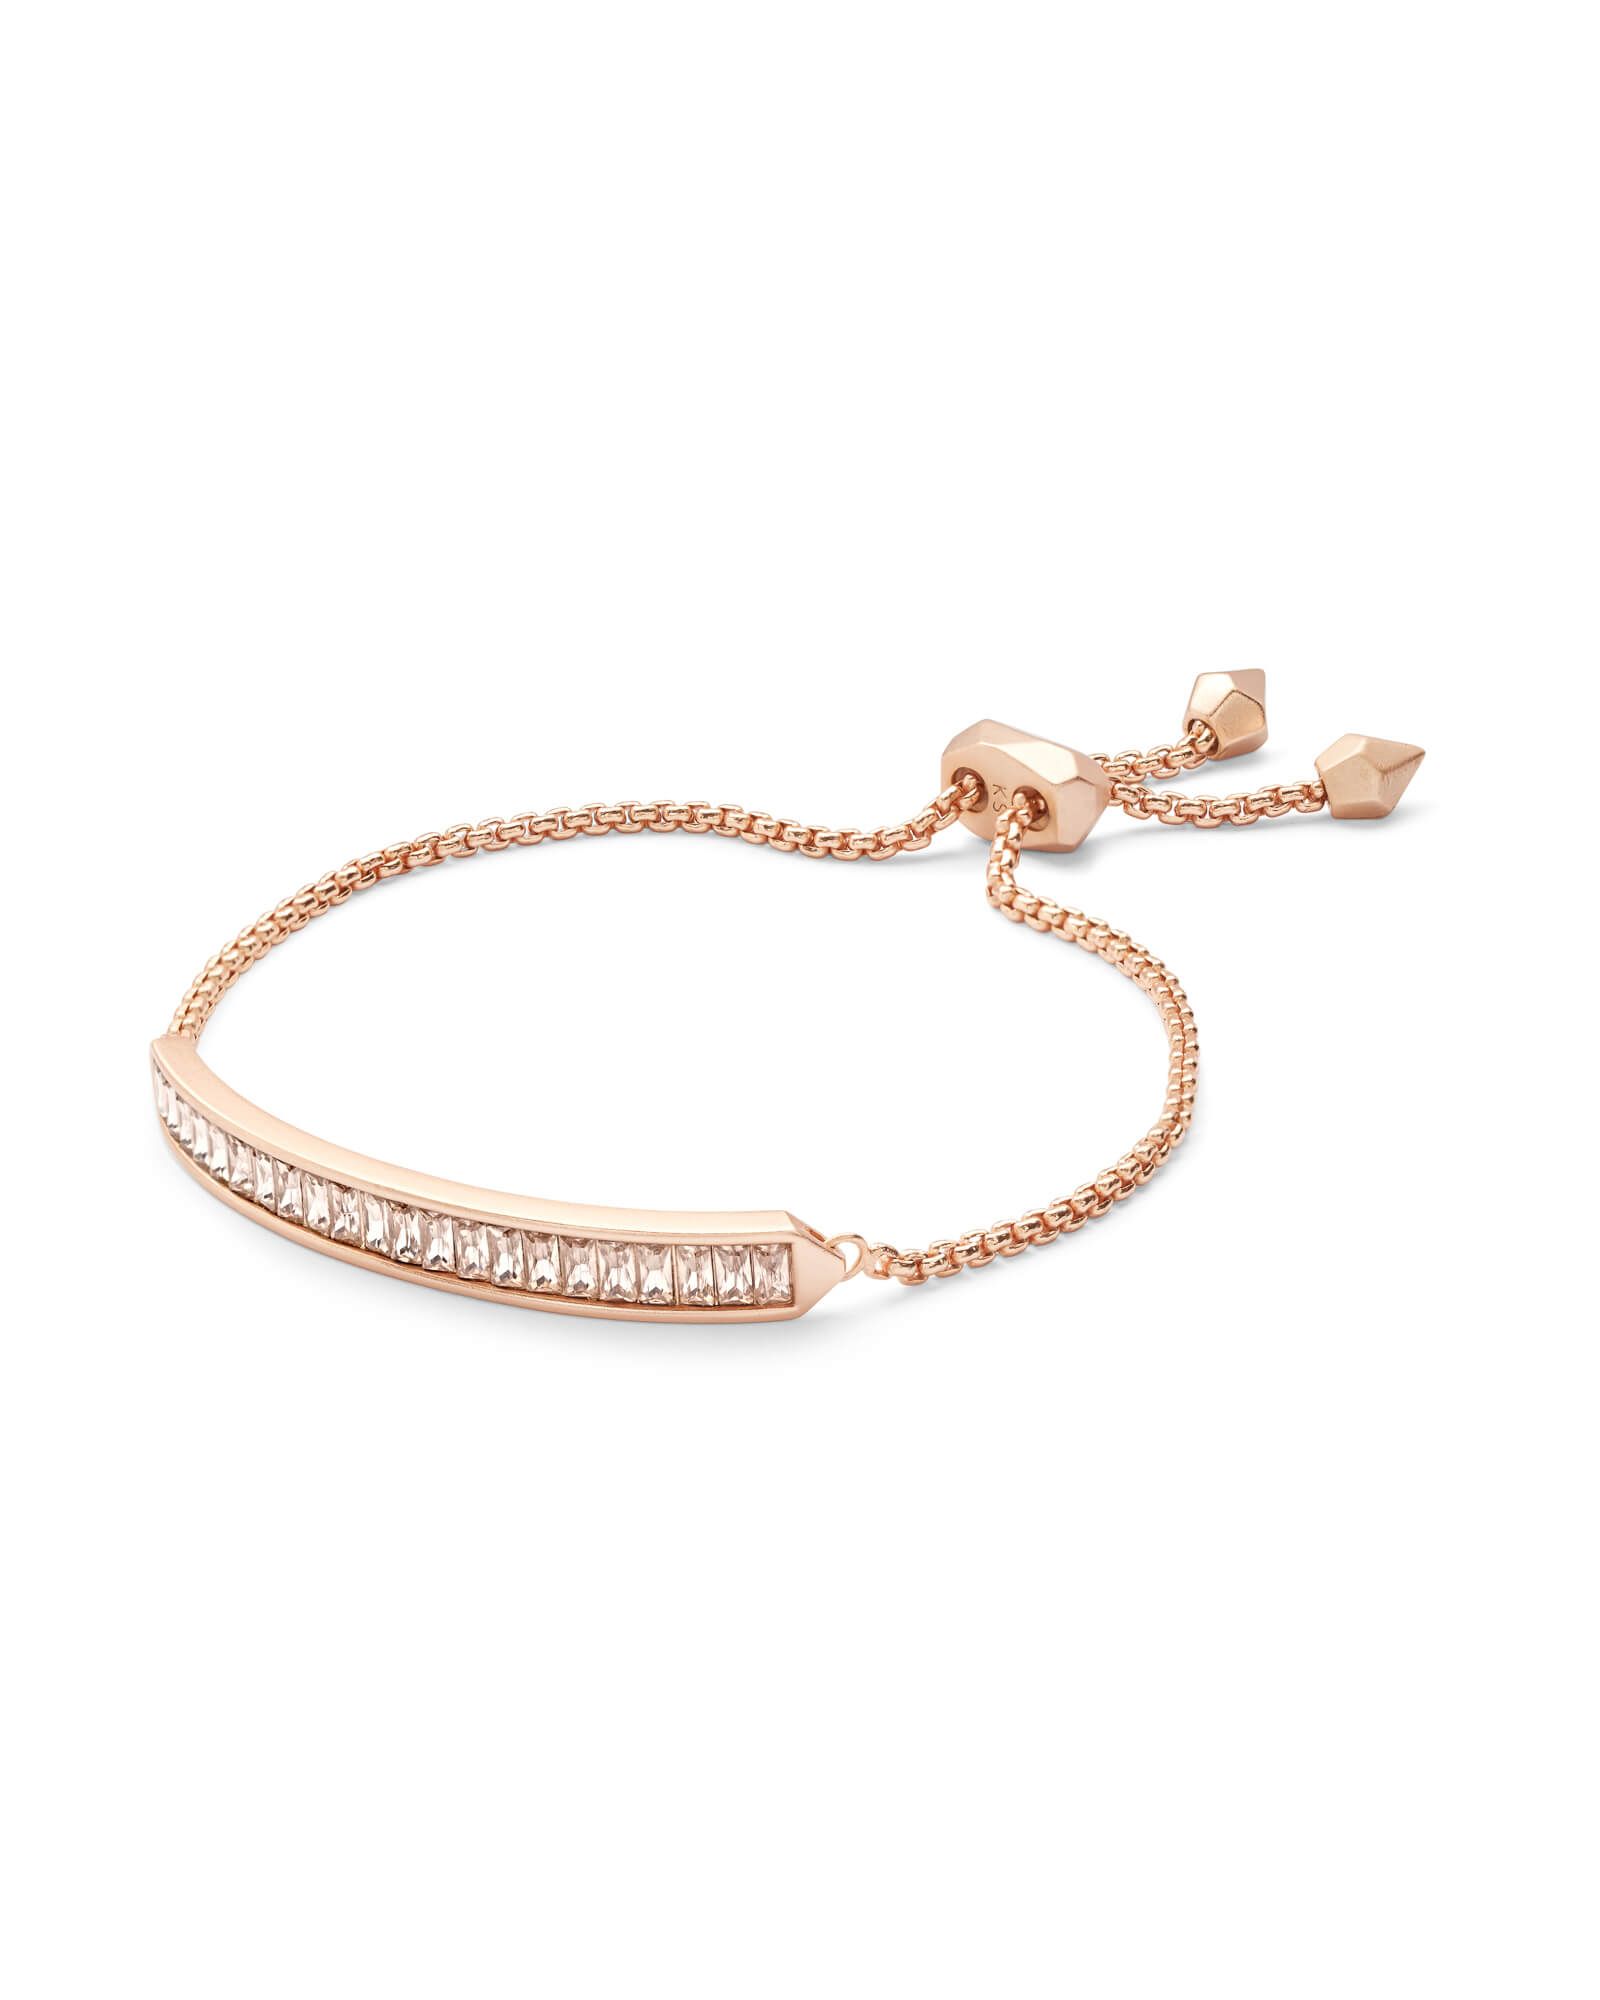 Jack Rose Gold Chain Bracelet in Blush Crystal | Kendra Scott